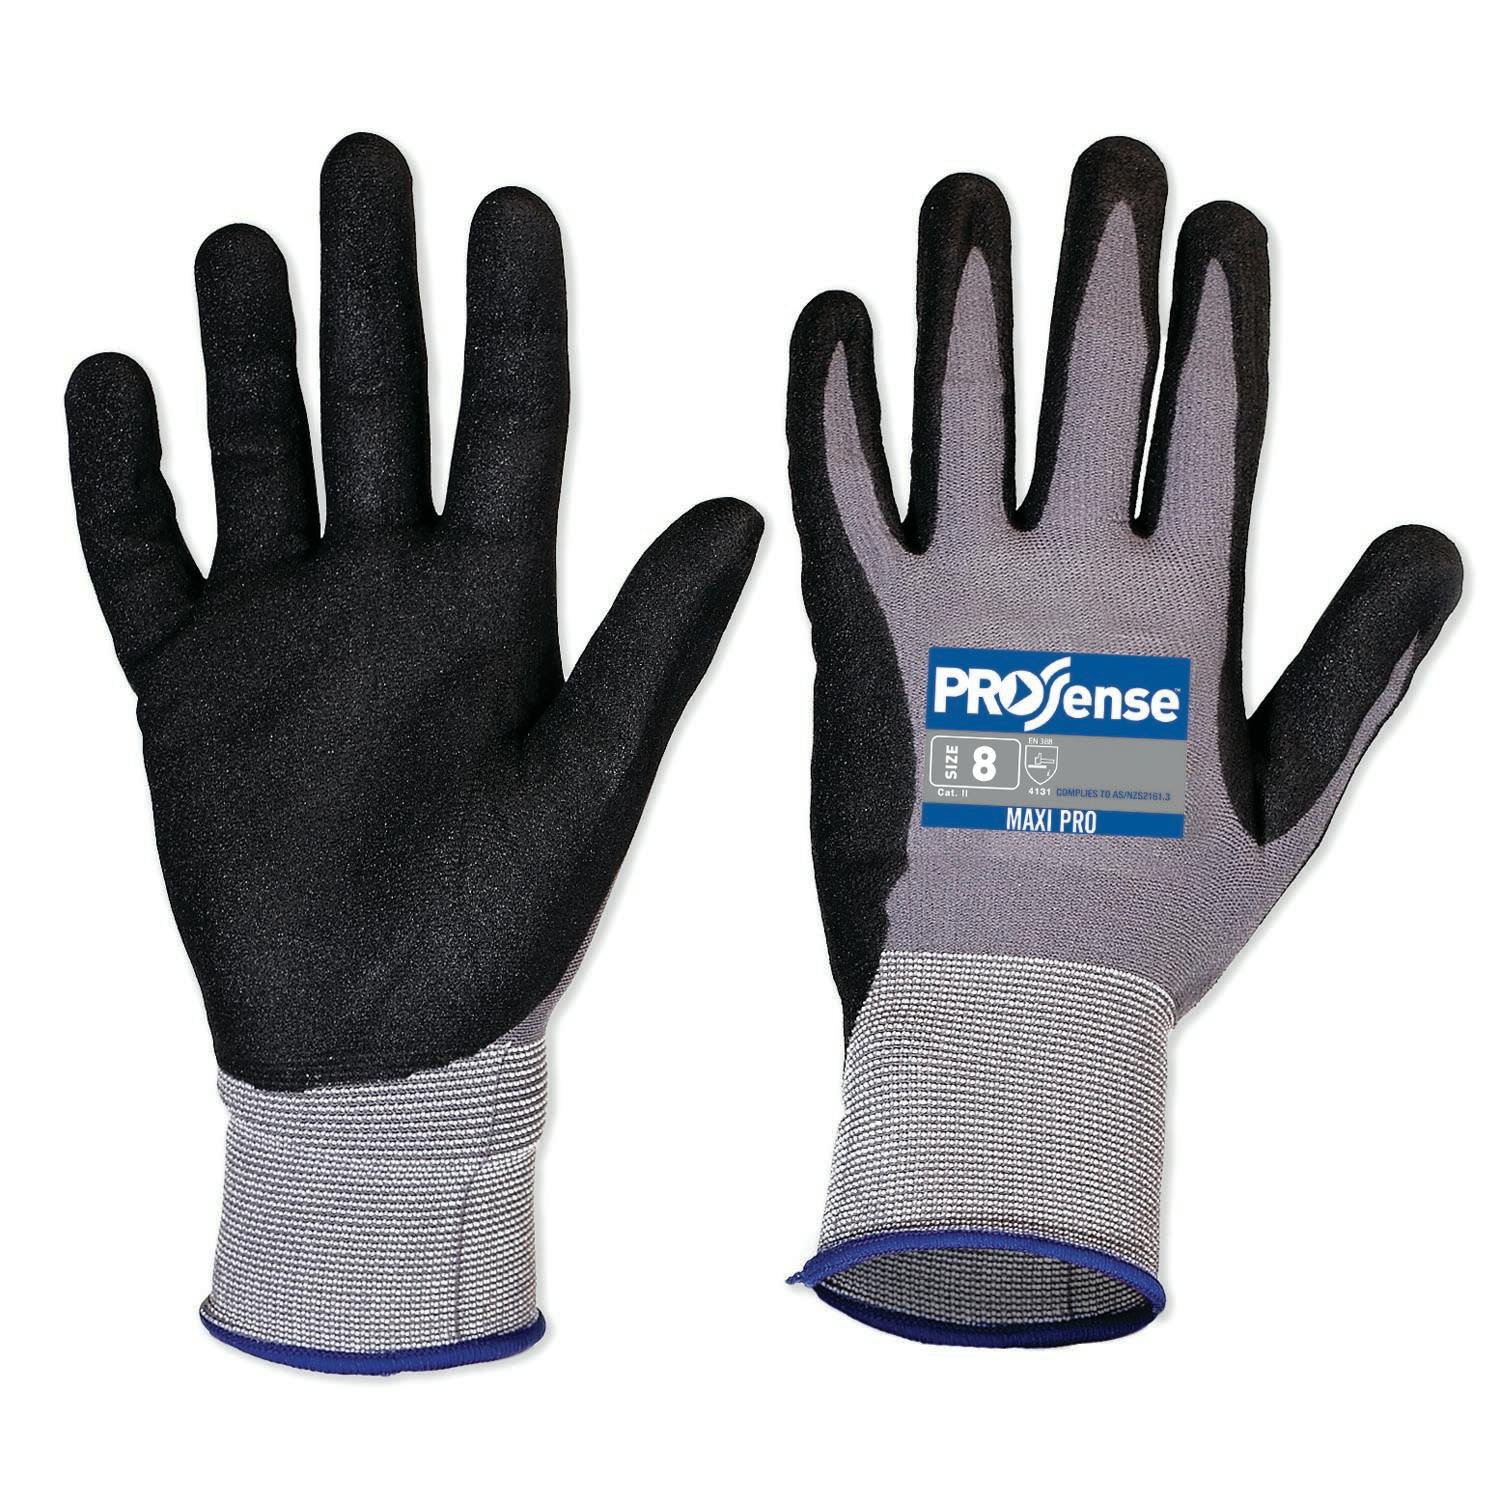 Pro Choice Prosense Maxi-Pro Gloves_5